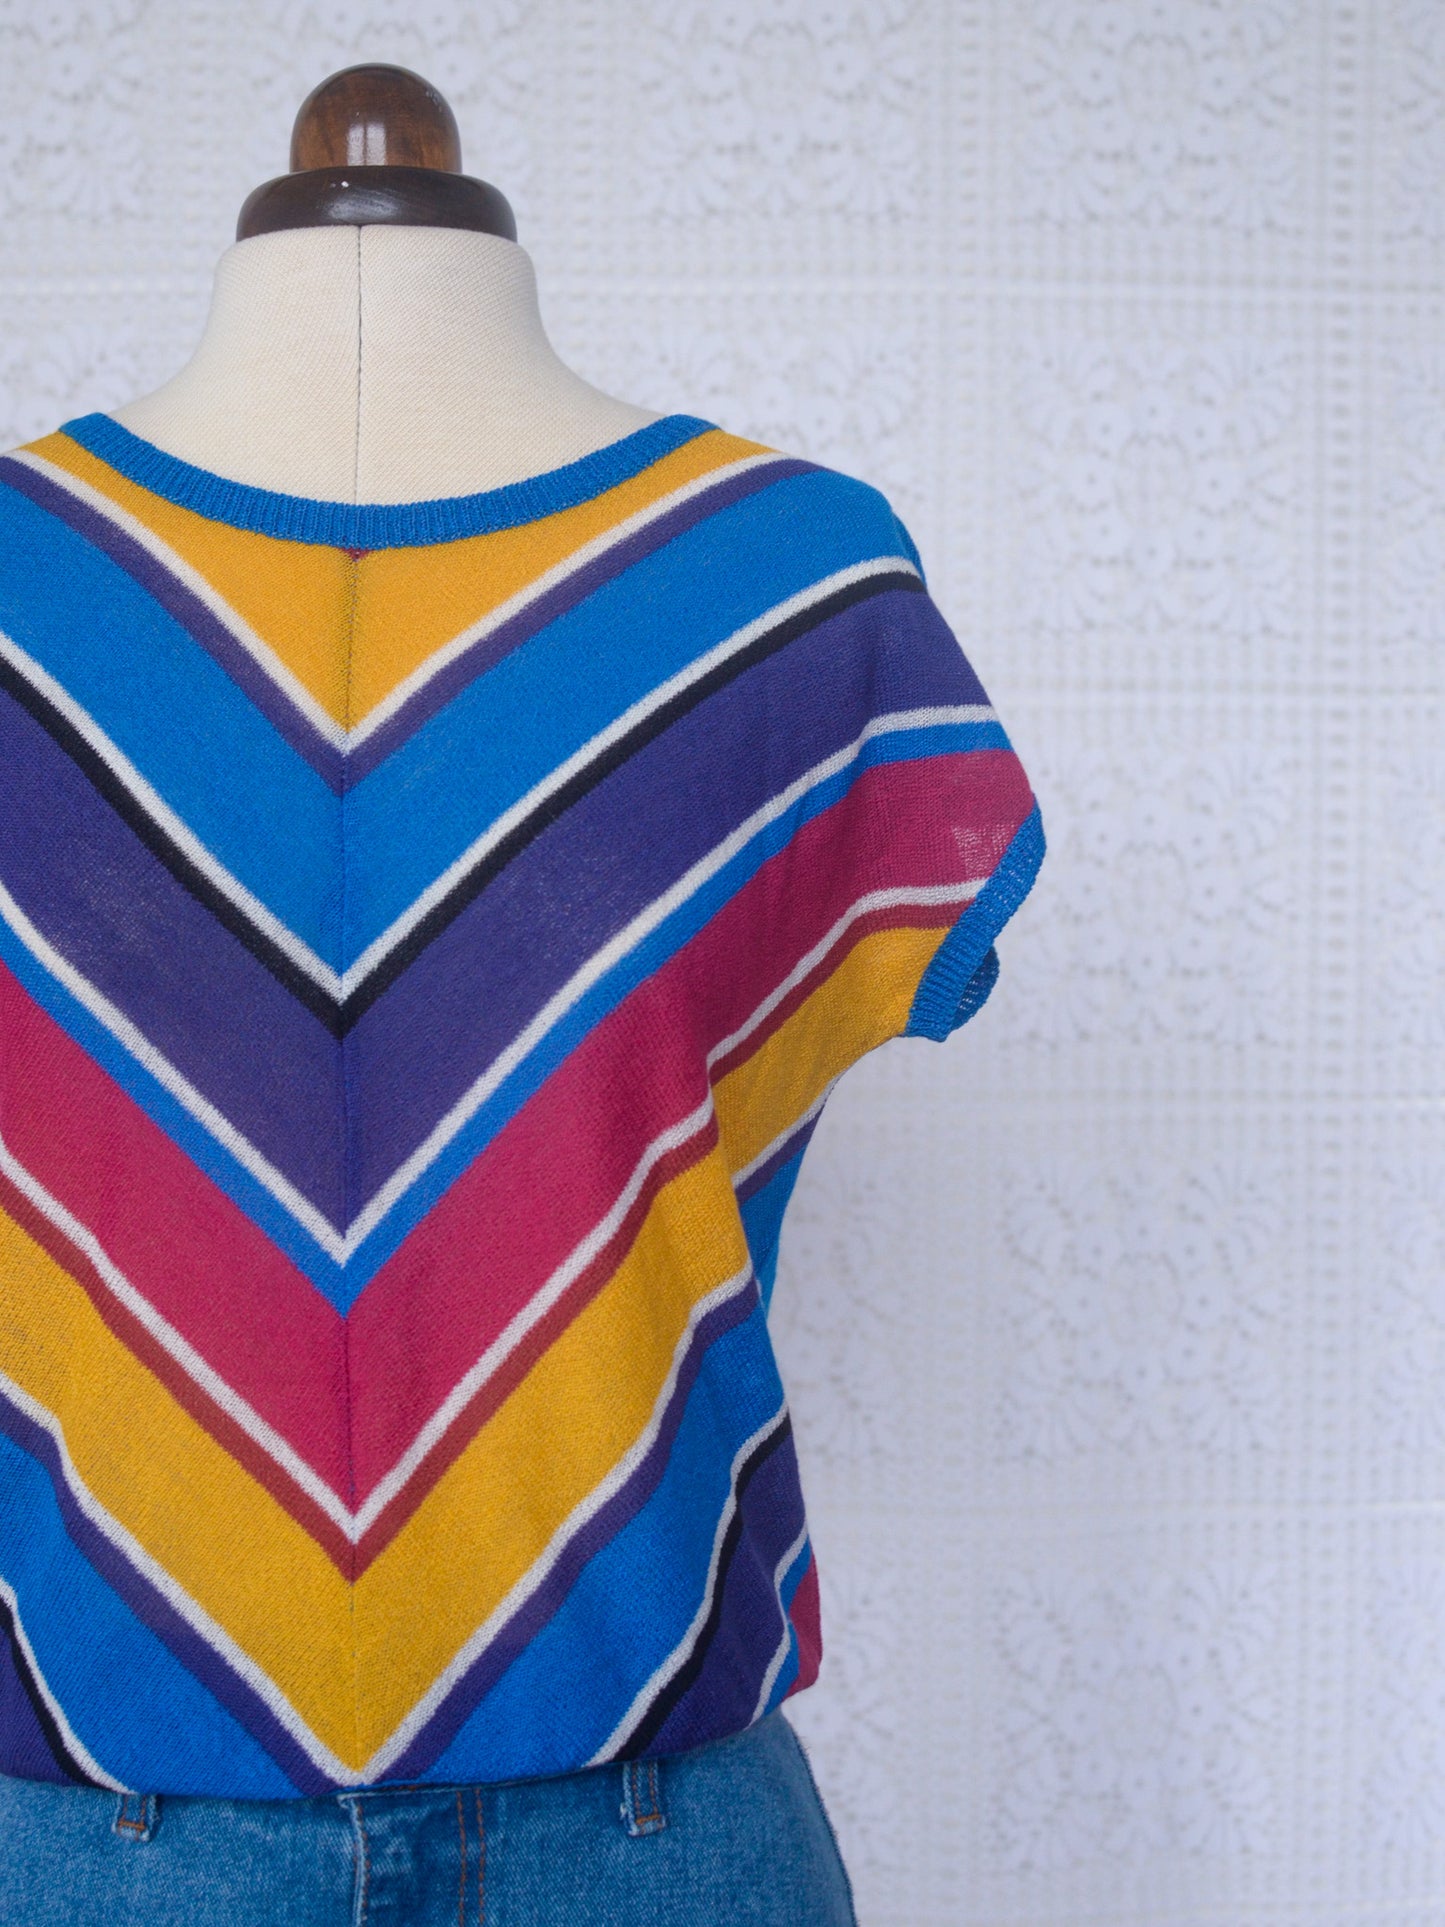 1980s style blue, purple, pink and yellow chevron sleeveless jumper